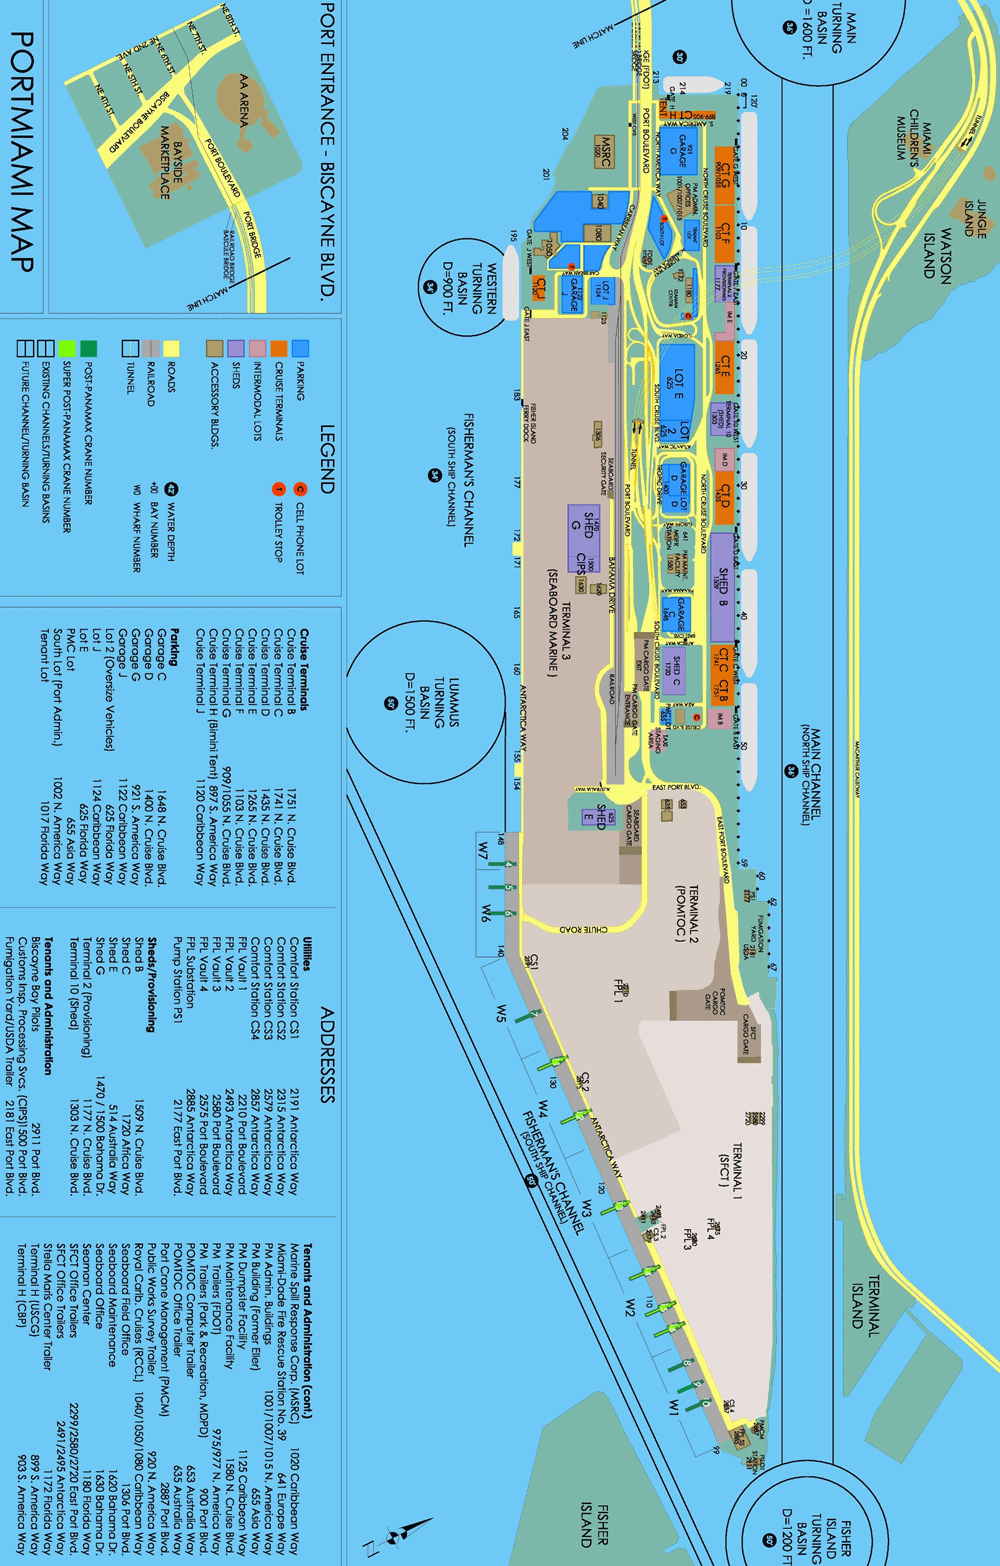 miami (florida) cruise port schedule | cruisemapper